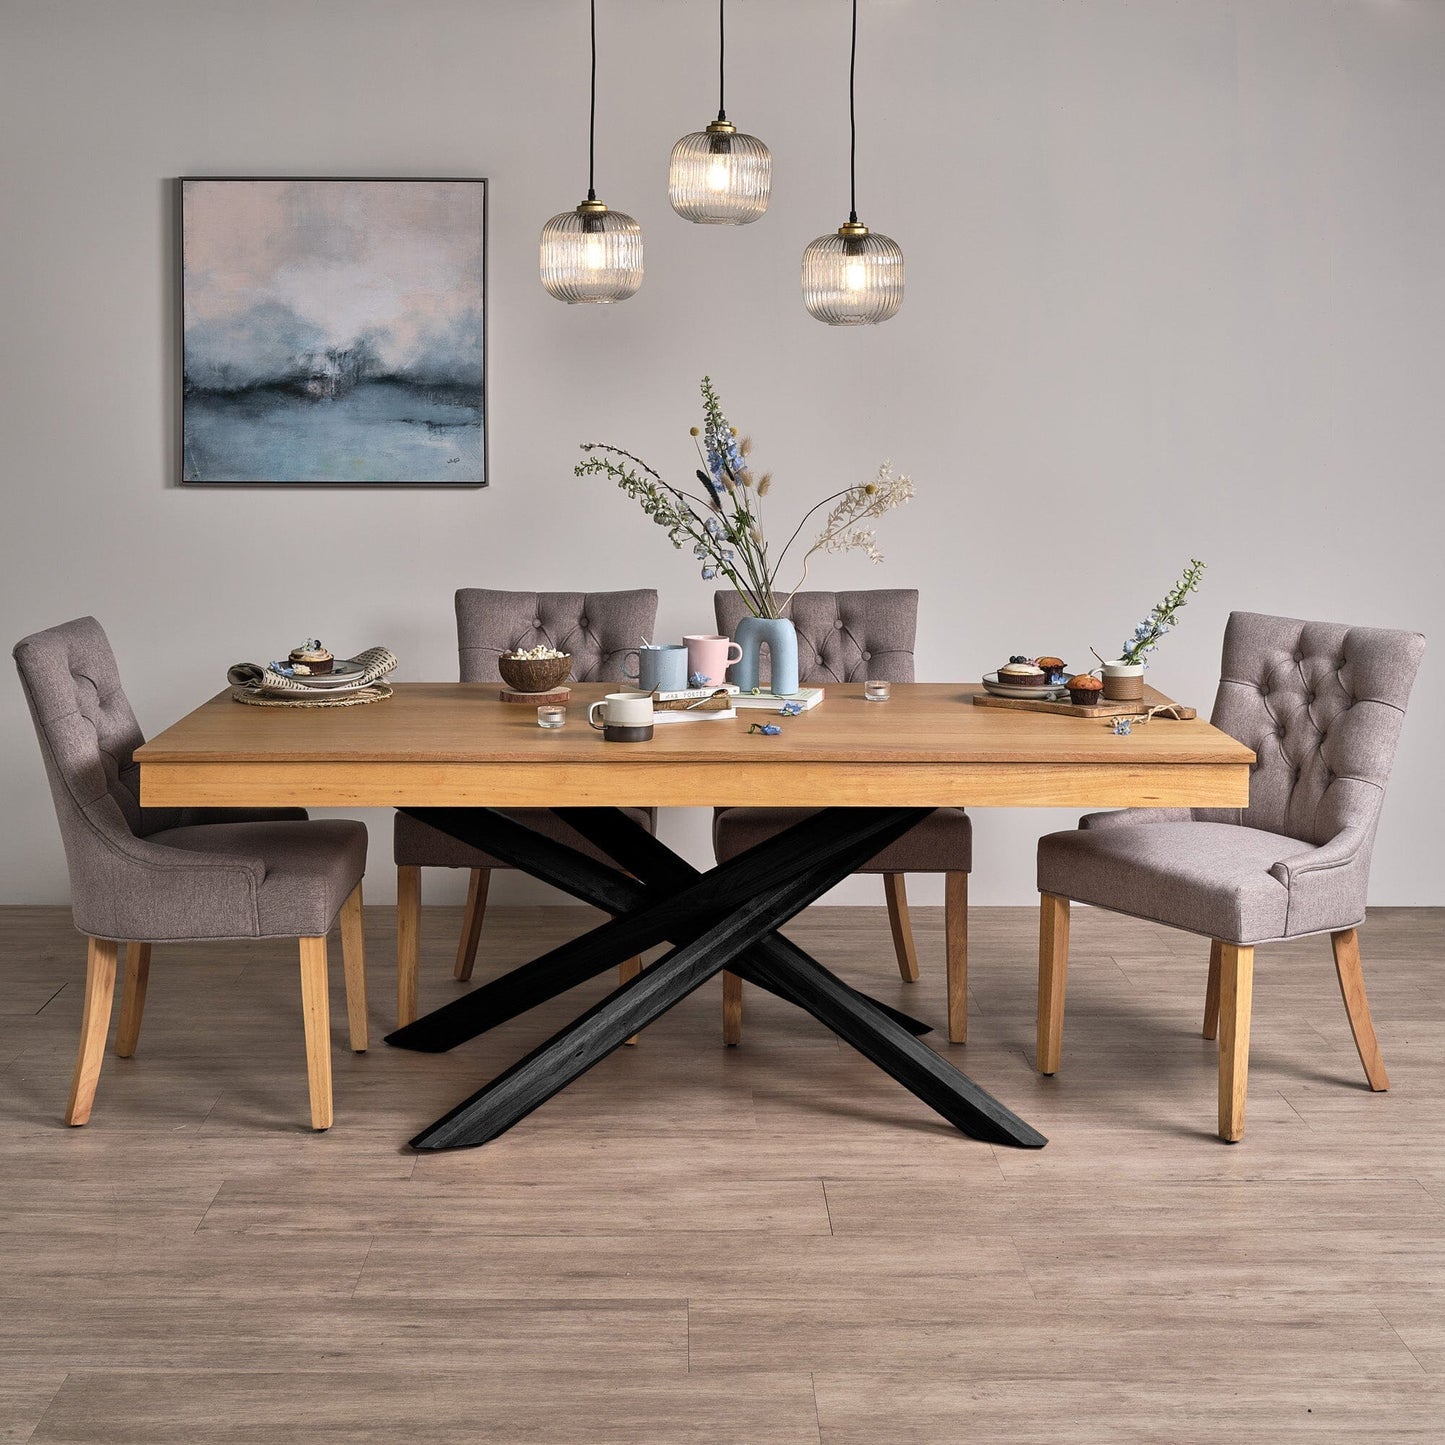 Amelia Oak wood dining table - with black legs